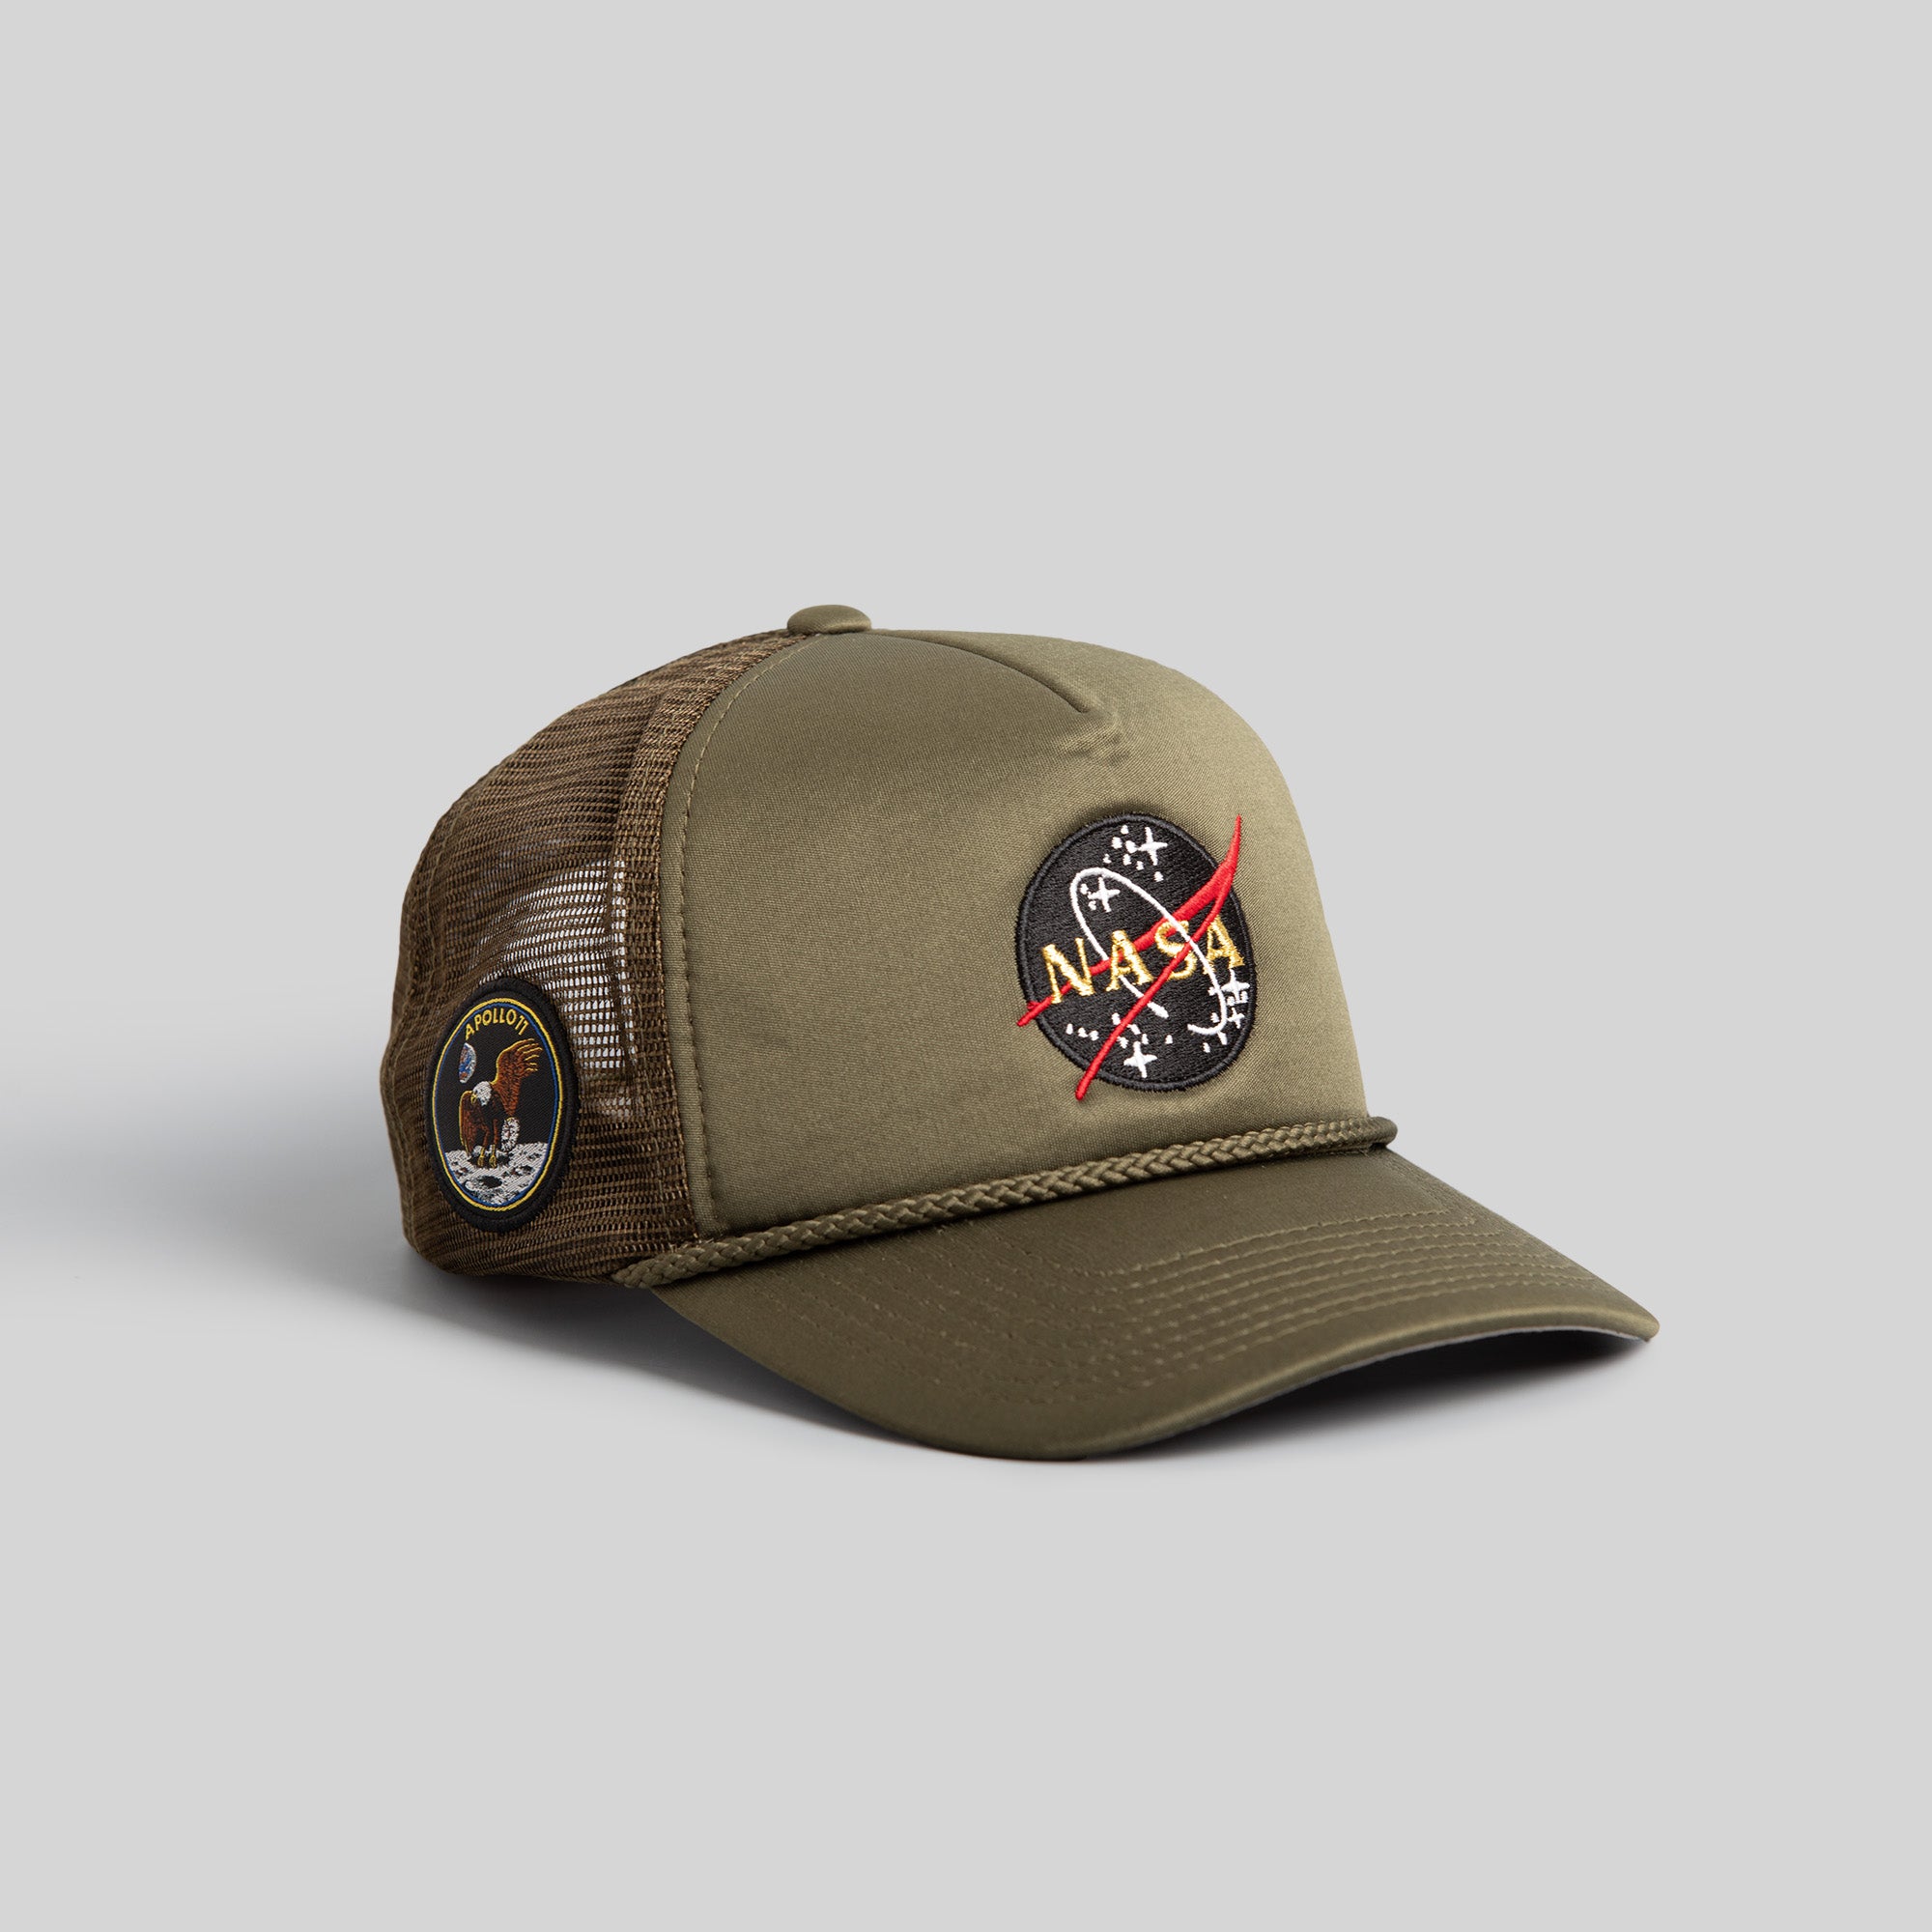 SKYLAB NASA 50TH ANNIVERSARY OLIVE TRUCKER HAT